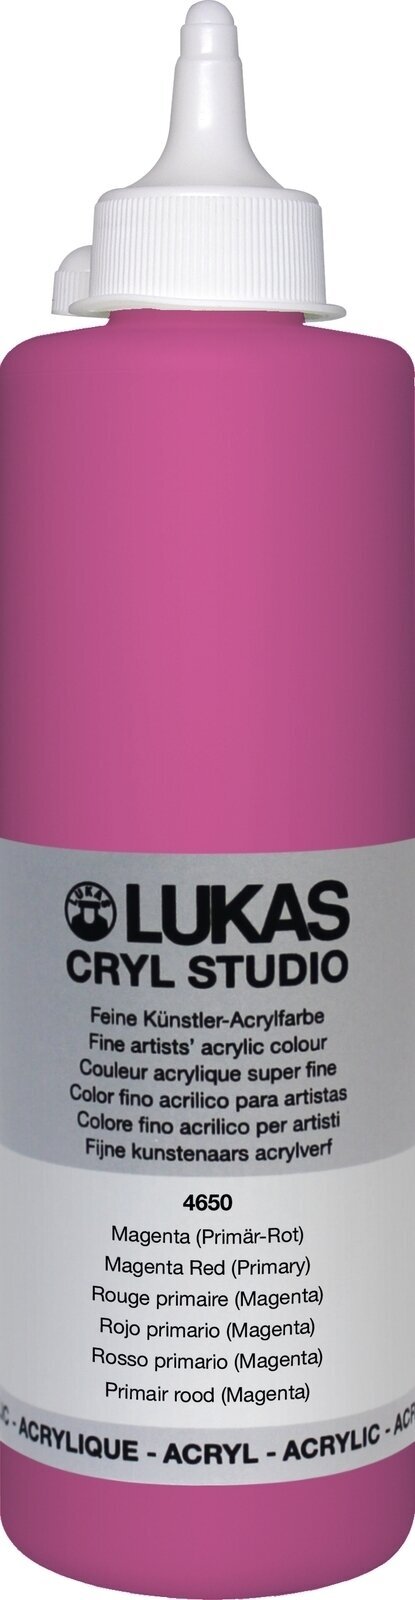 Tinta acrílica Lukas Cryl Studio Tinta acrílica 500 ml Magenta Red (Primary)